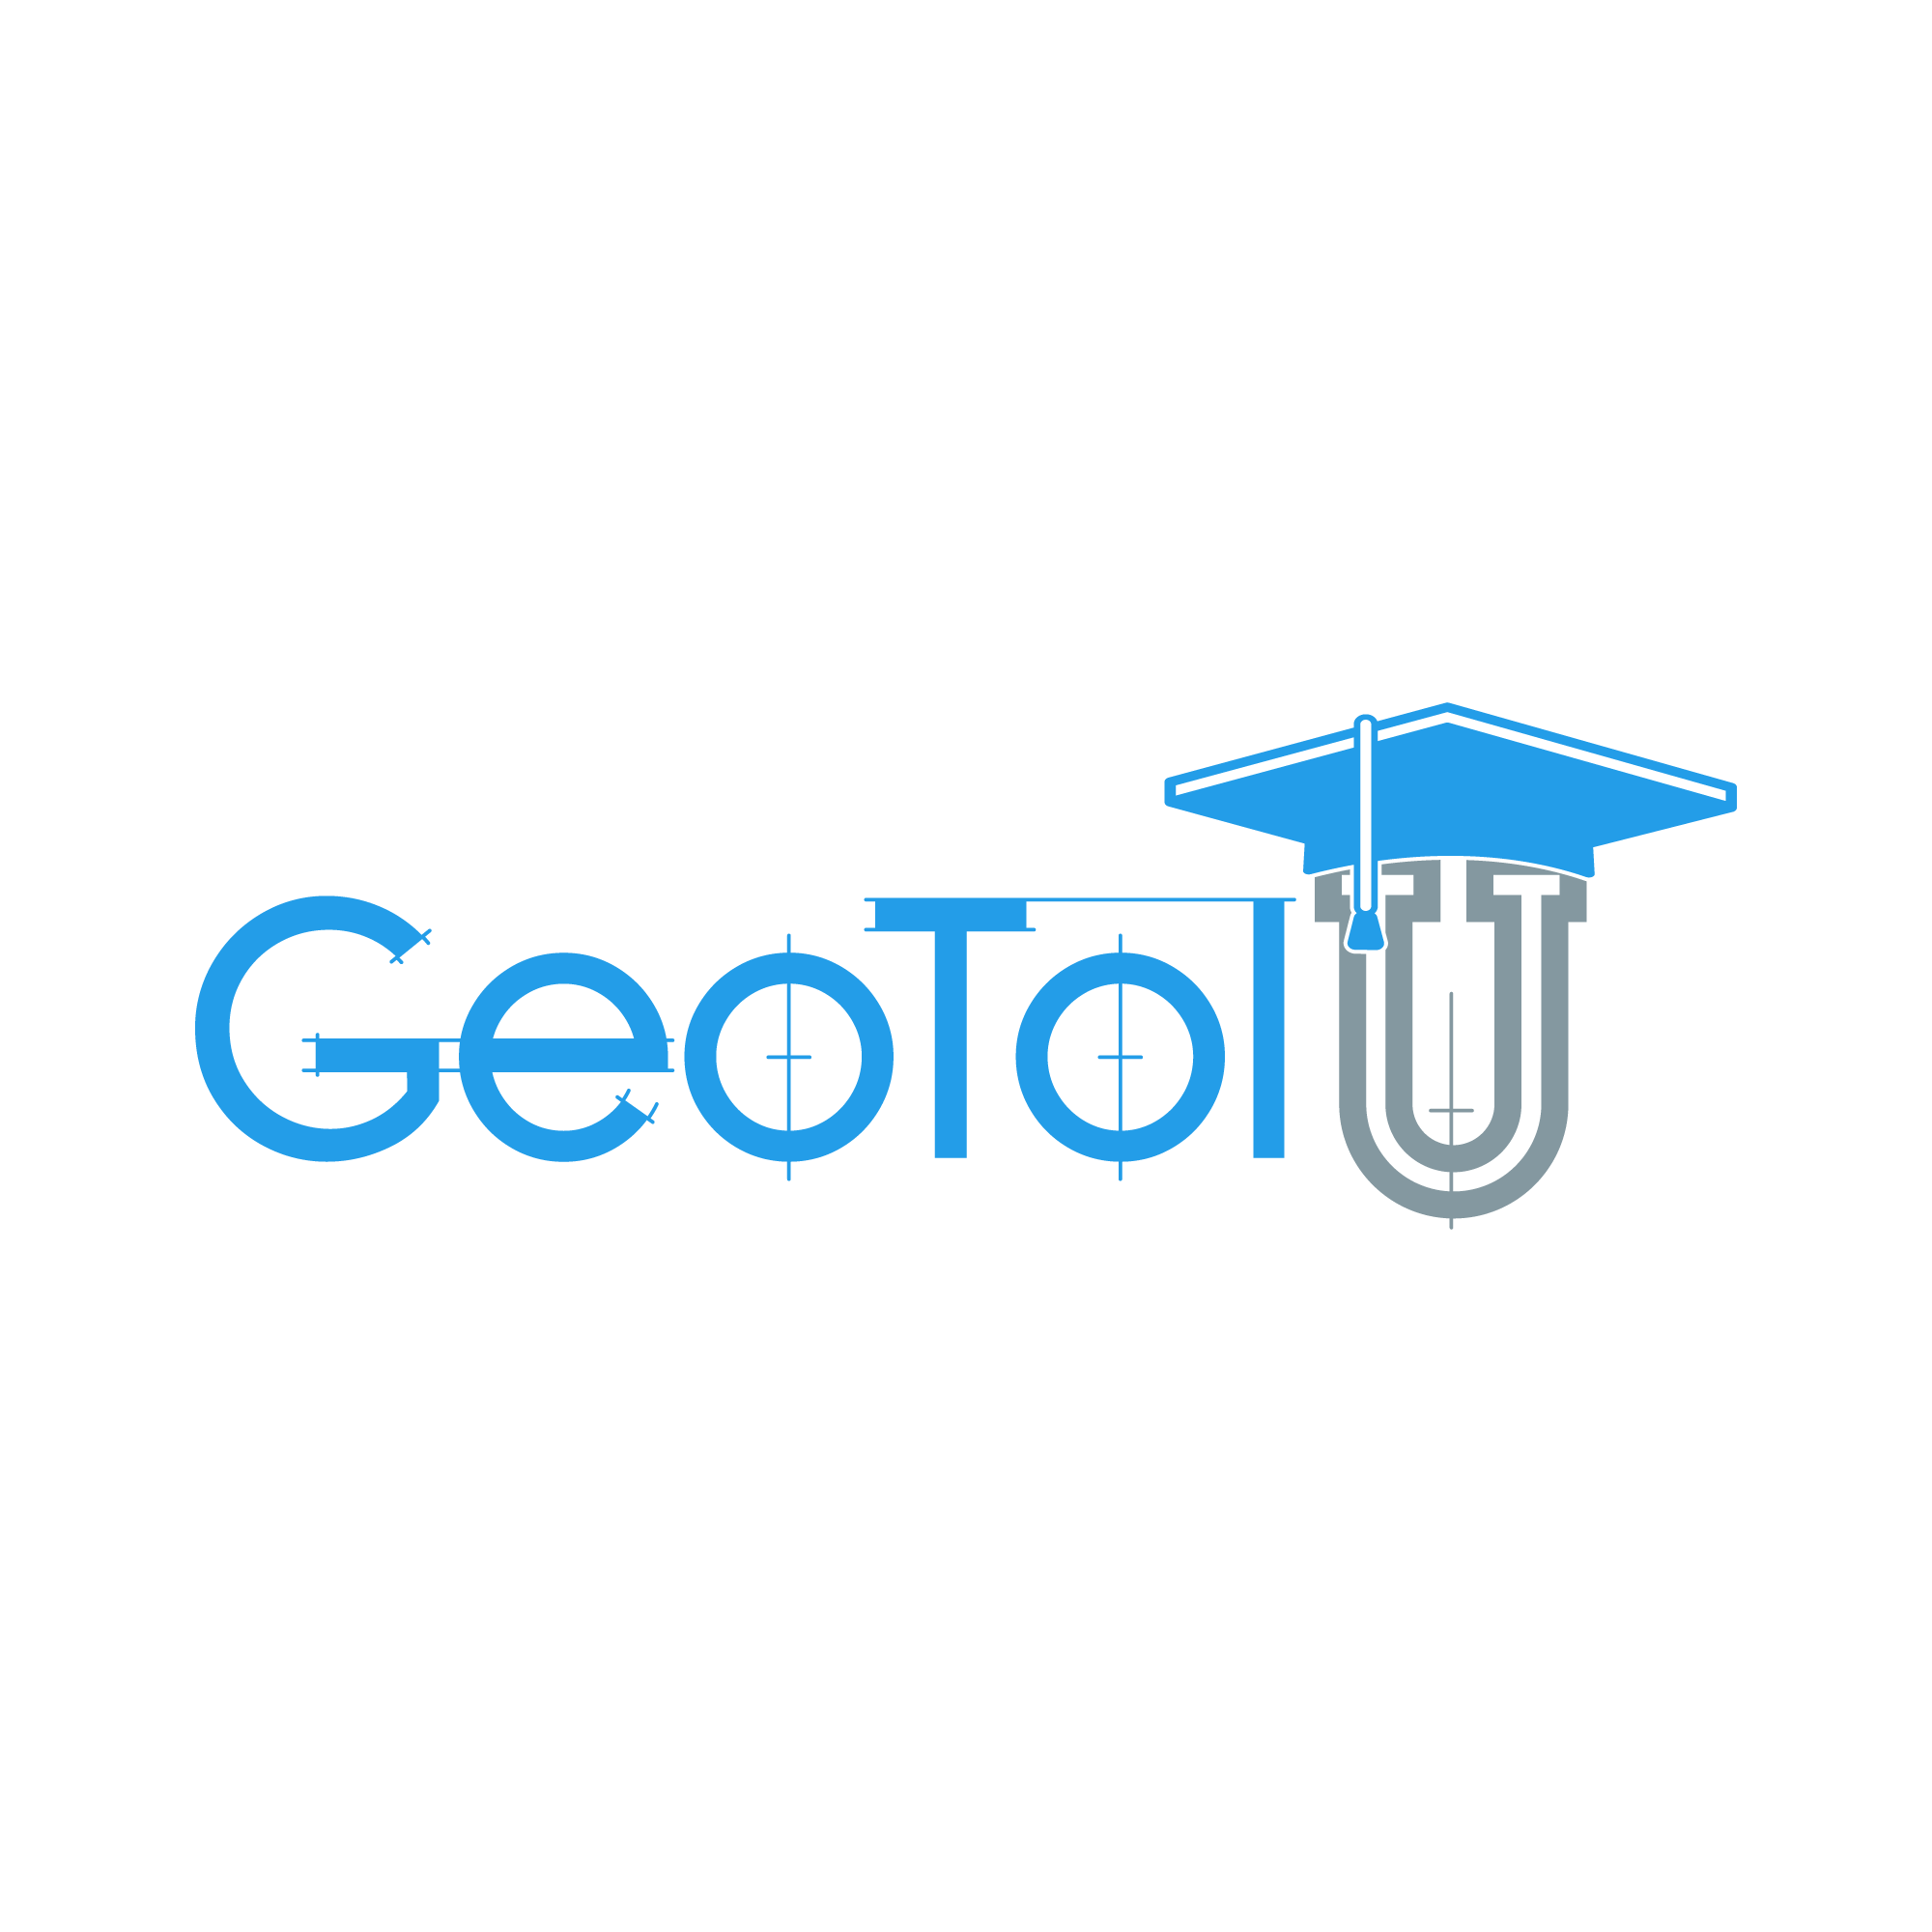 Welcome to GeoTol U!